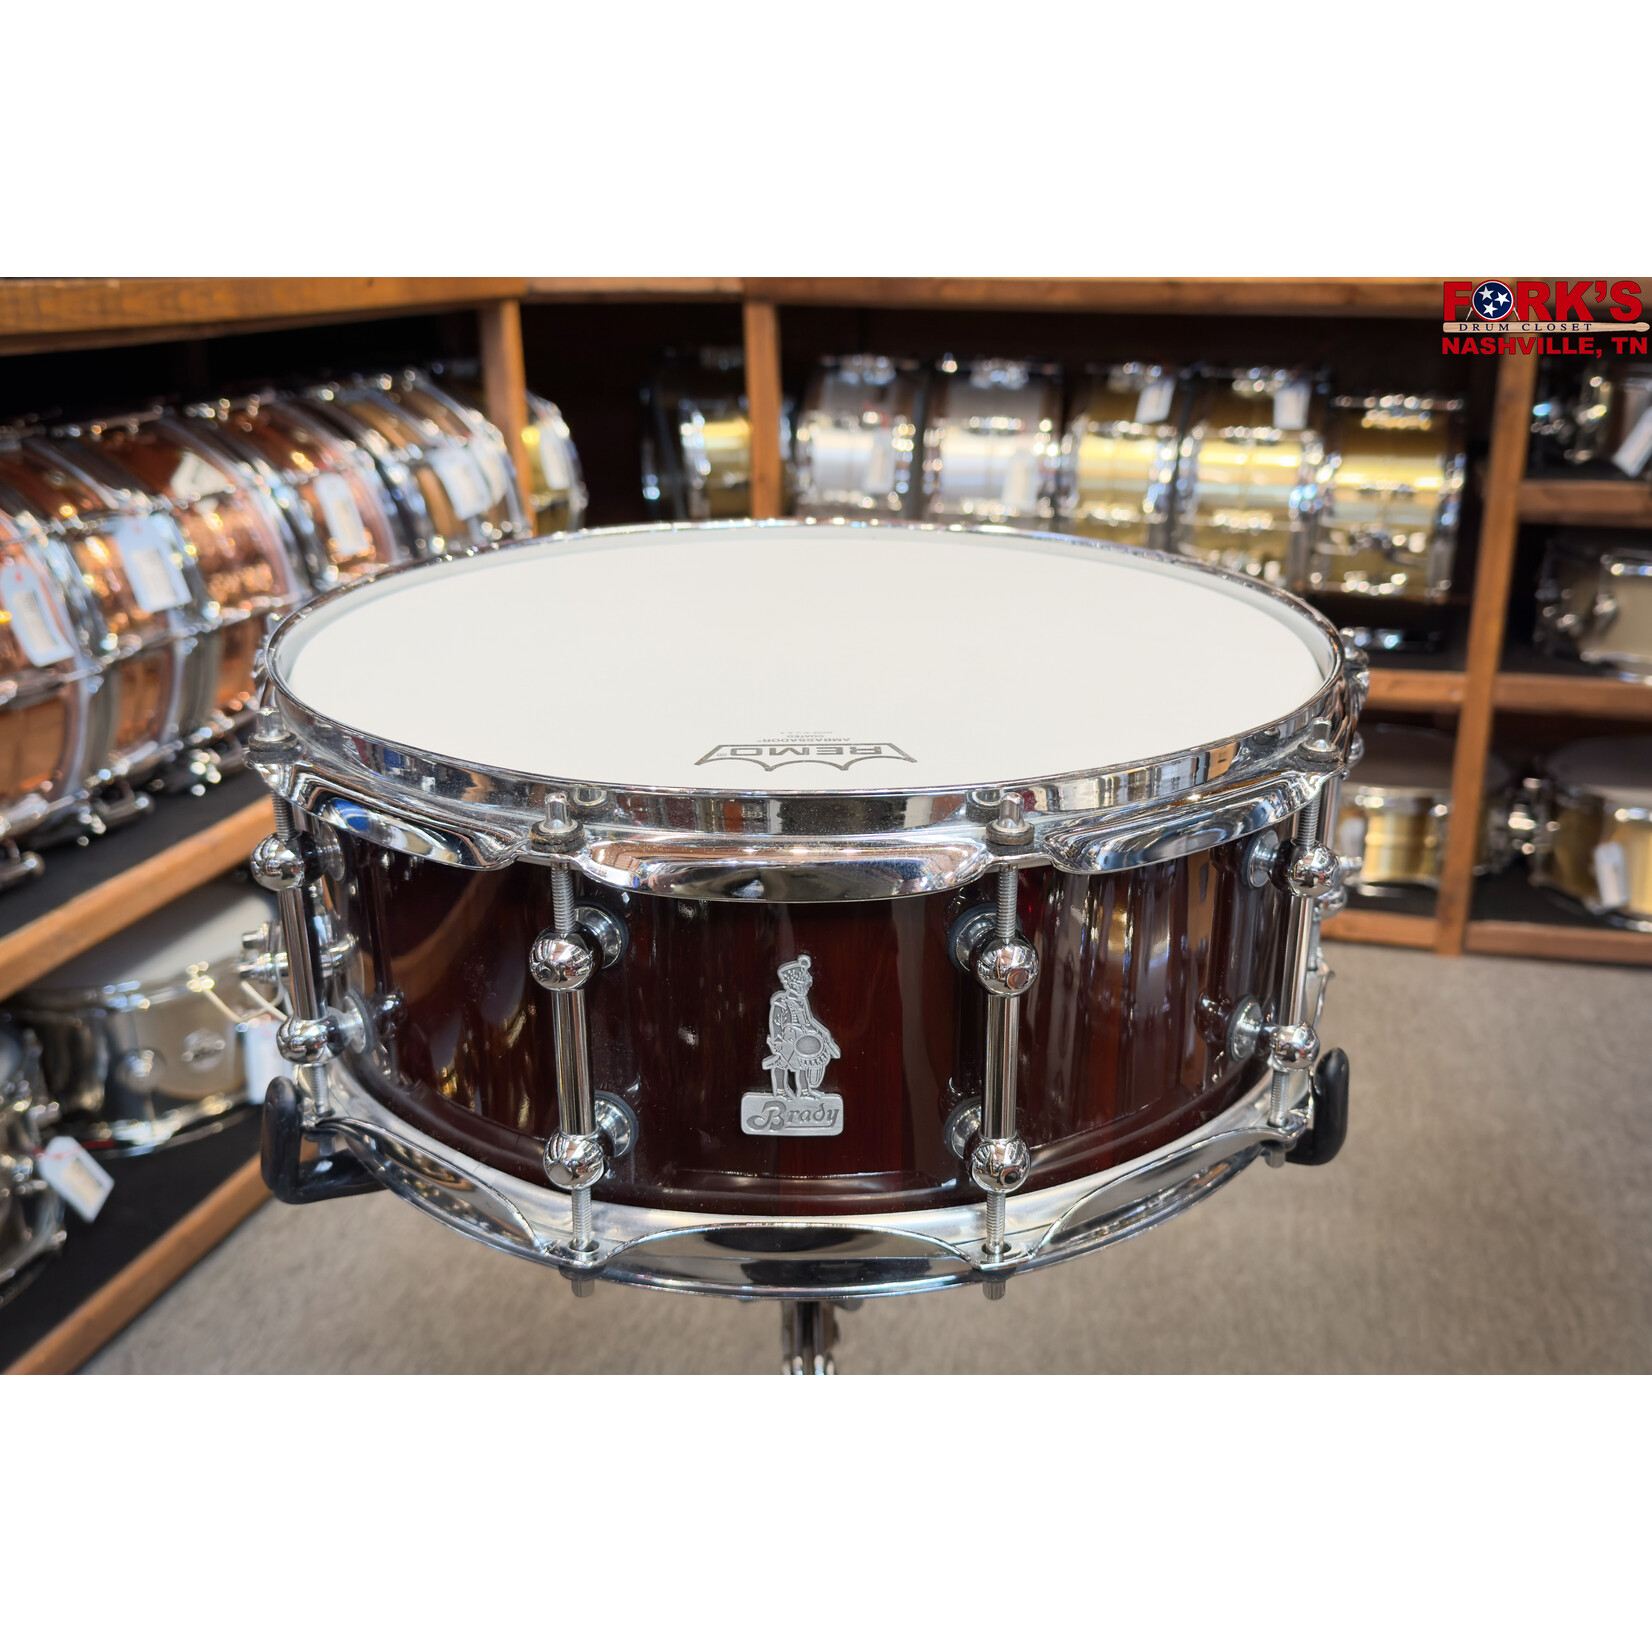 Brady Brady 5.5x14 Jarrah Block Snare Drum - "Gloss Lacquer"